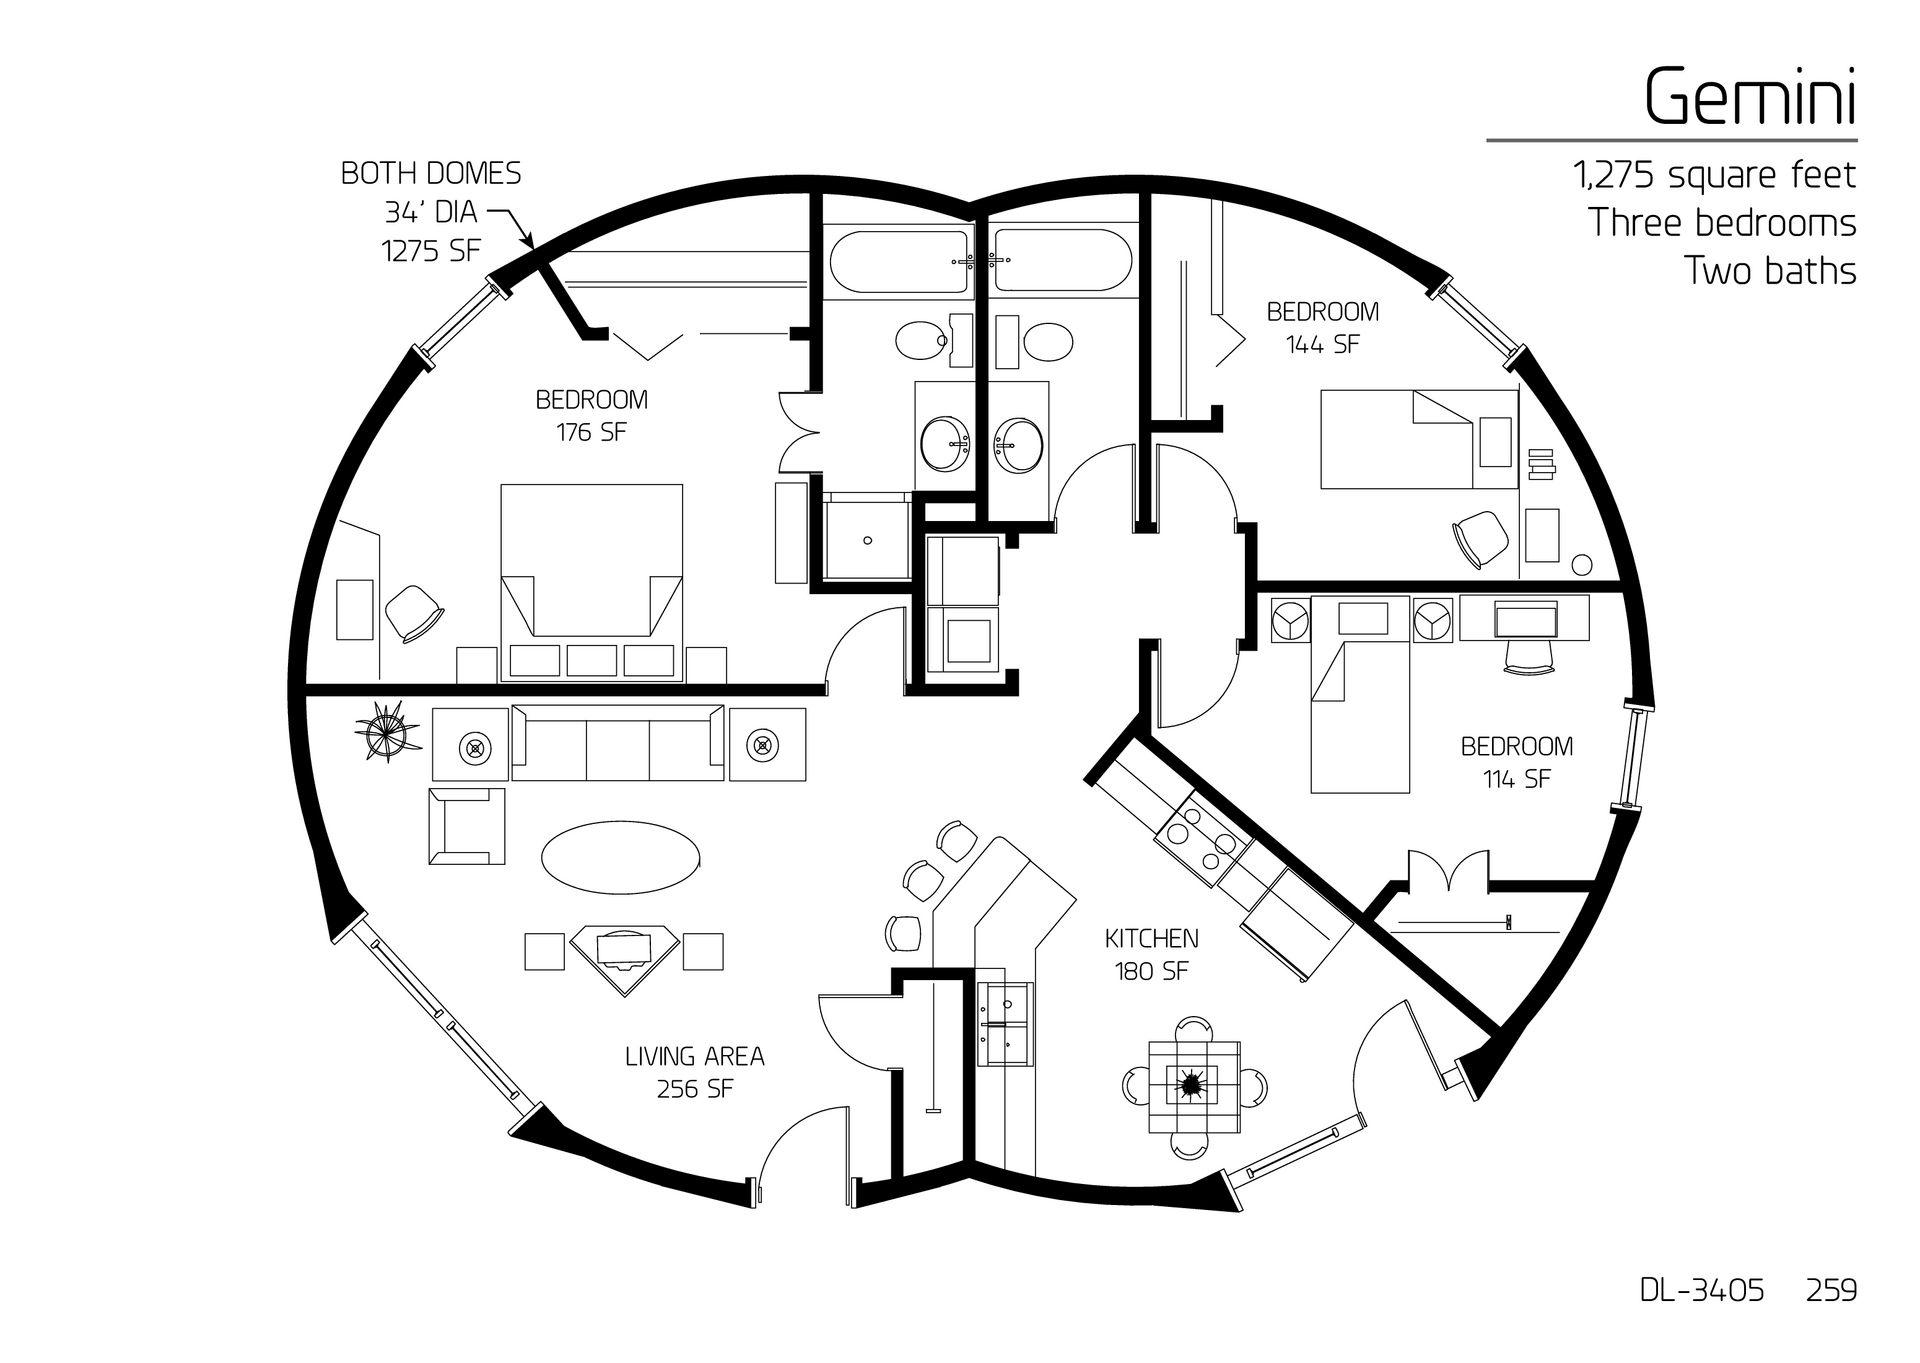 Gemini: 34' Diameter Double Domed, 1,275 SF, Three-Bedroom, Two-Bath Floor Plan.